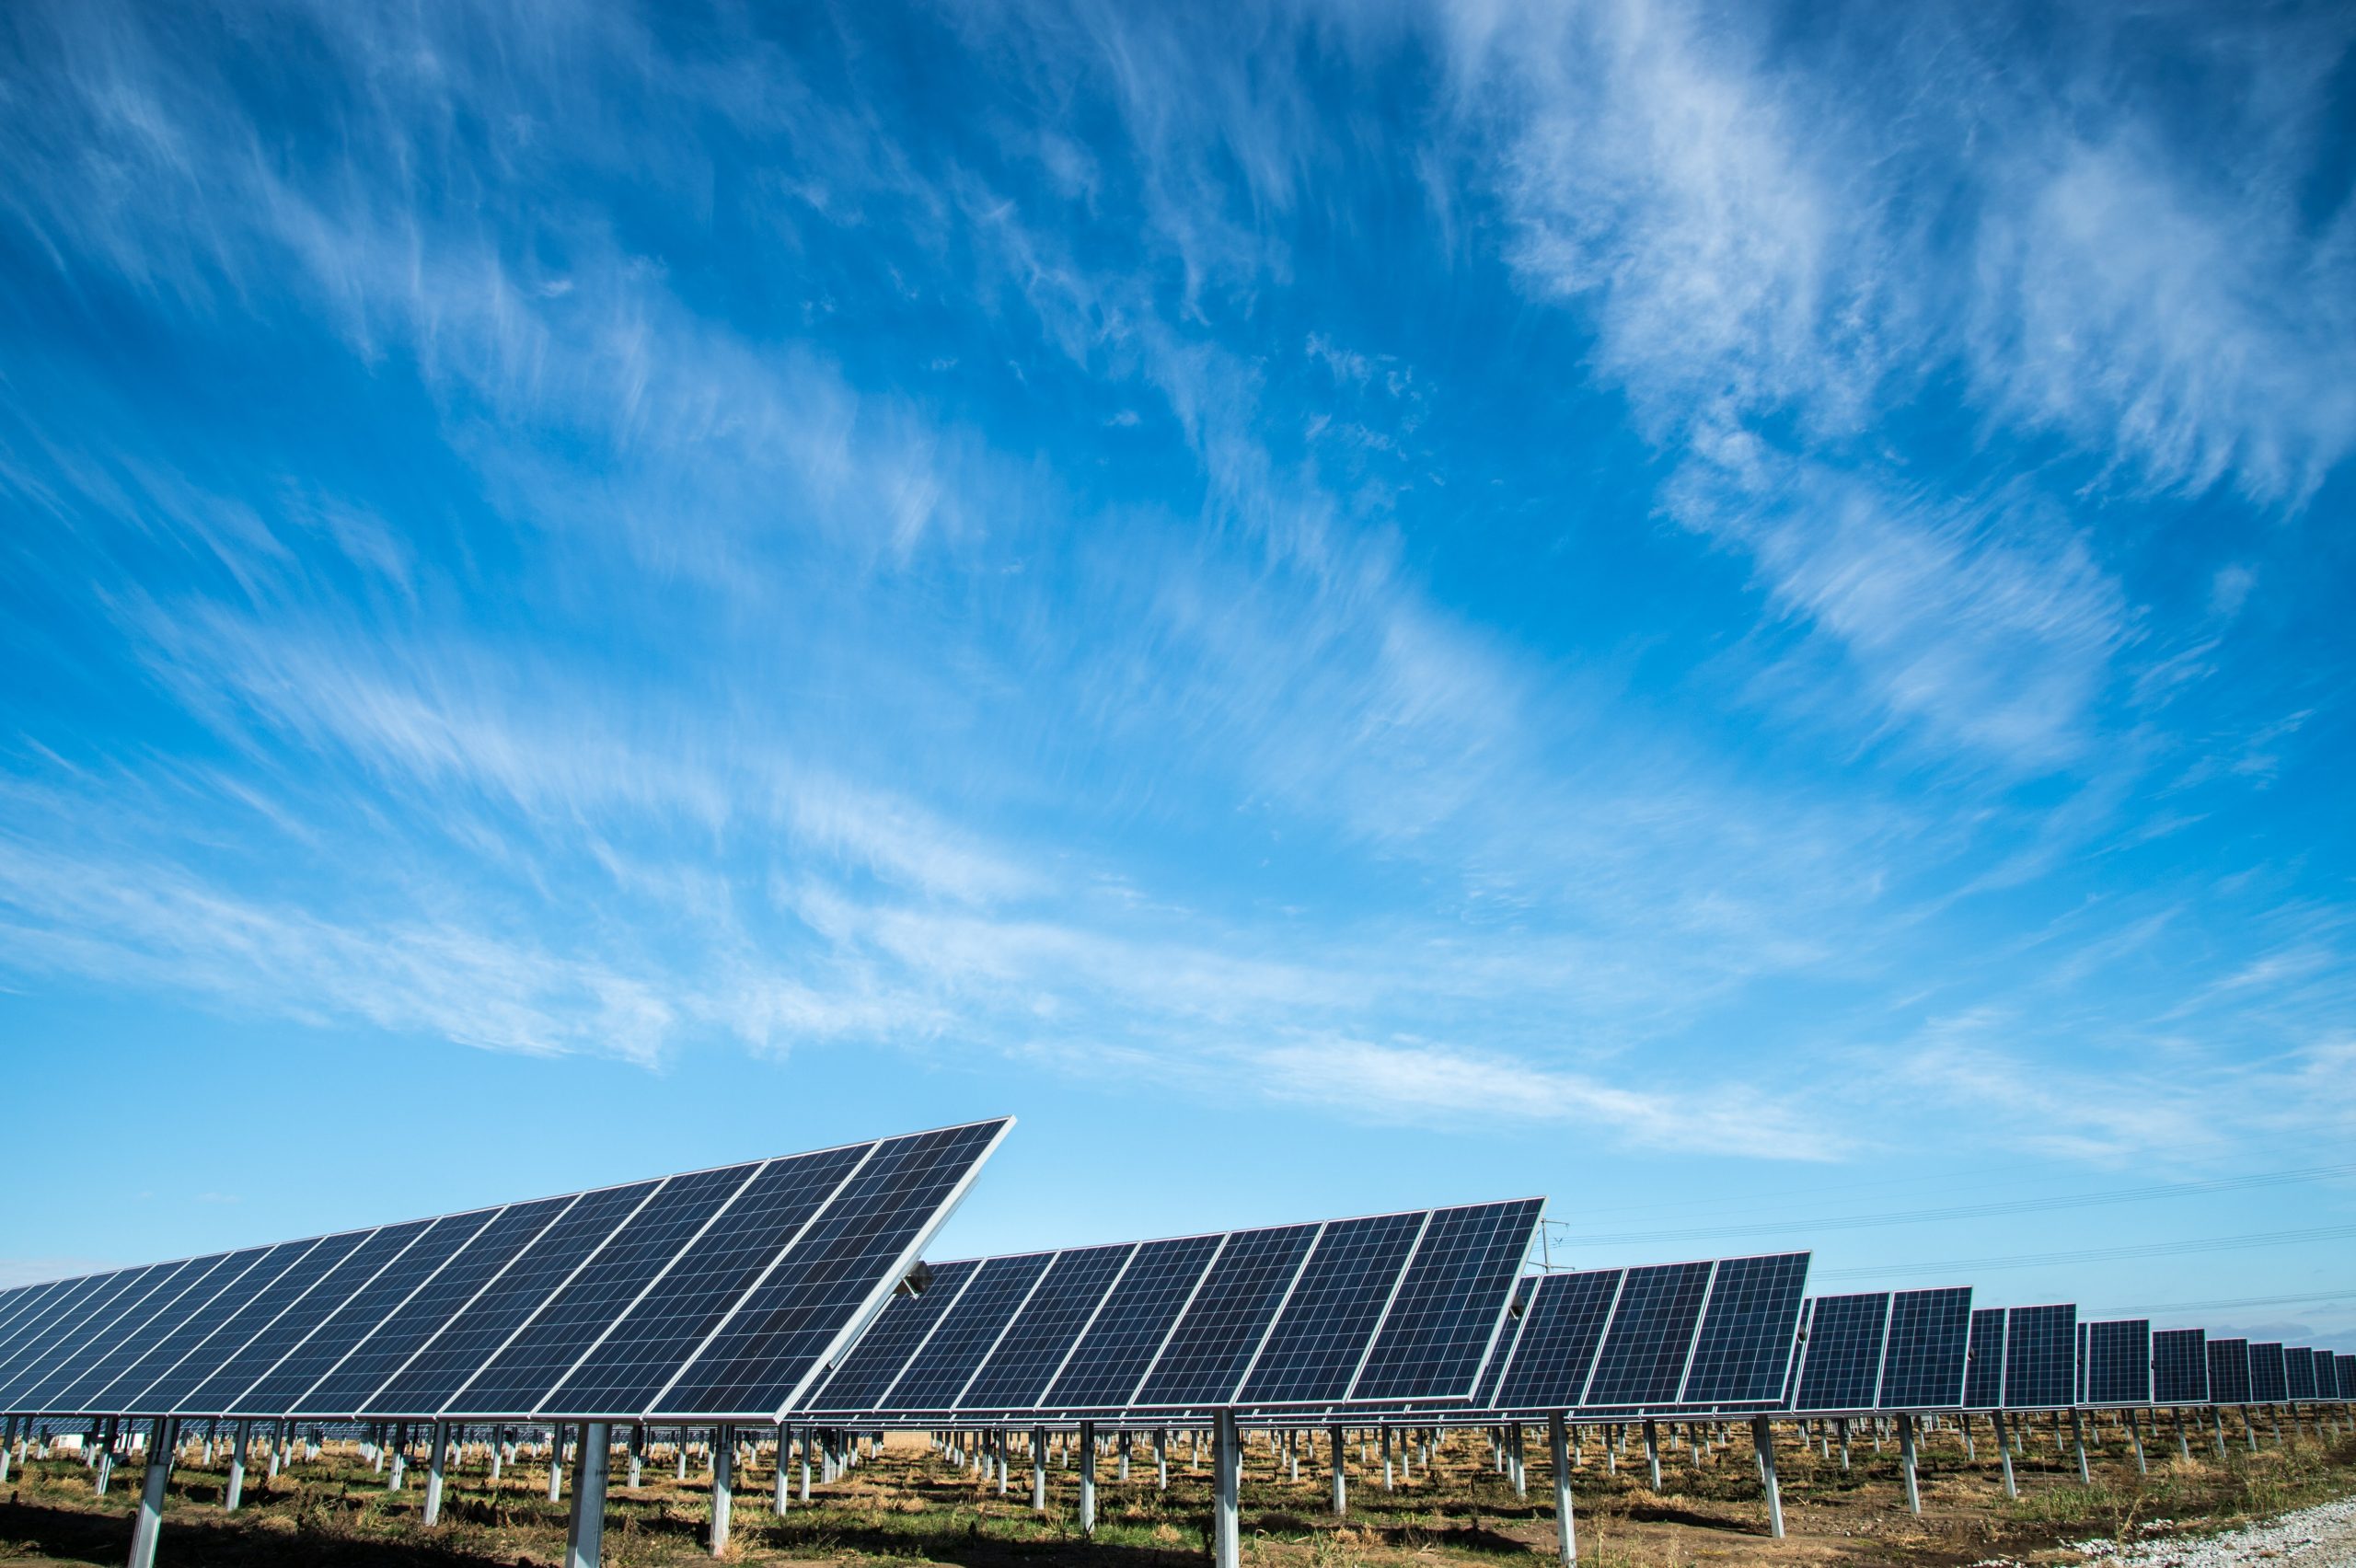 Energia solar corresponde a 11,6% da matriz energética brasileira